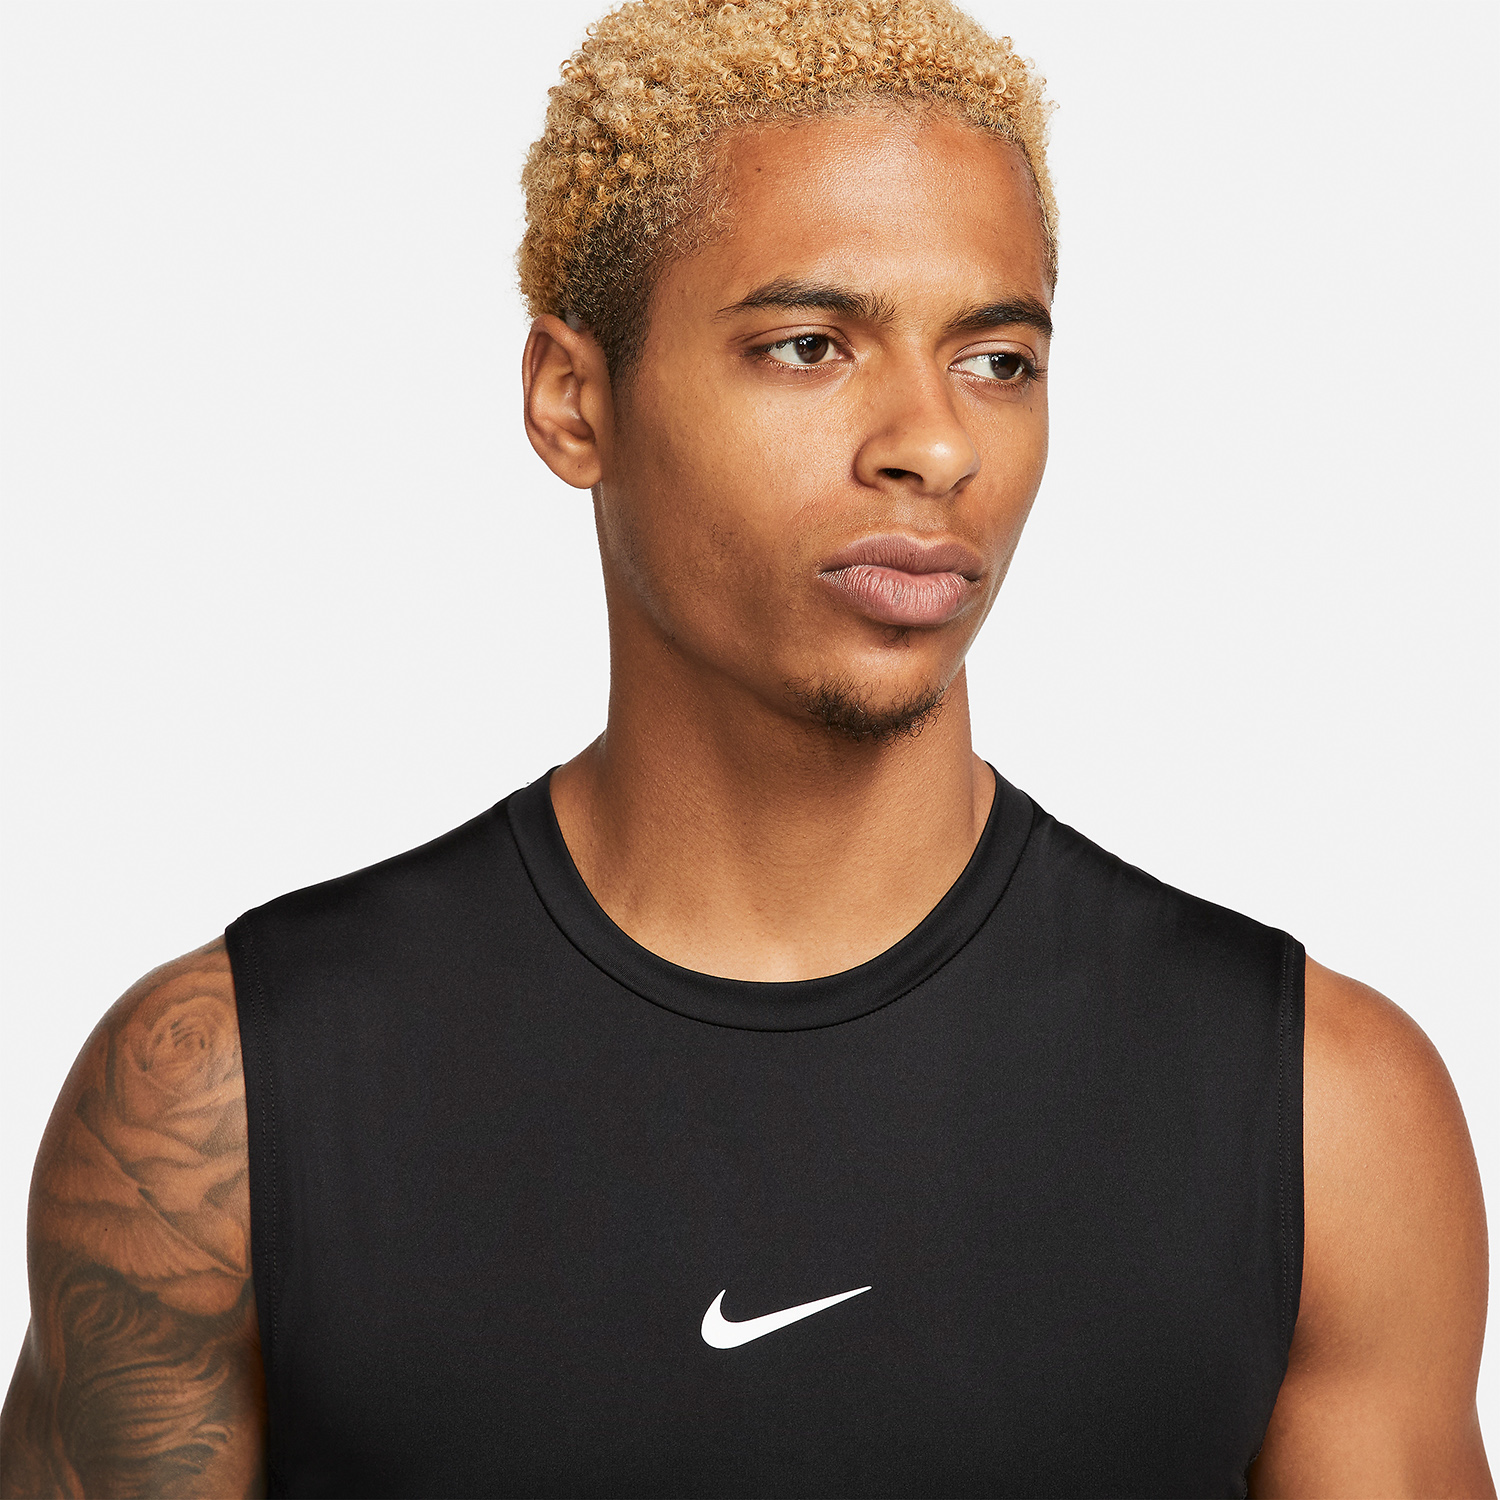 Nike Pro Dri-FIT Logo Tank - Black/White